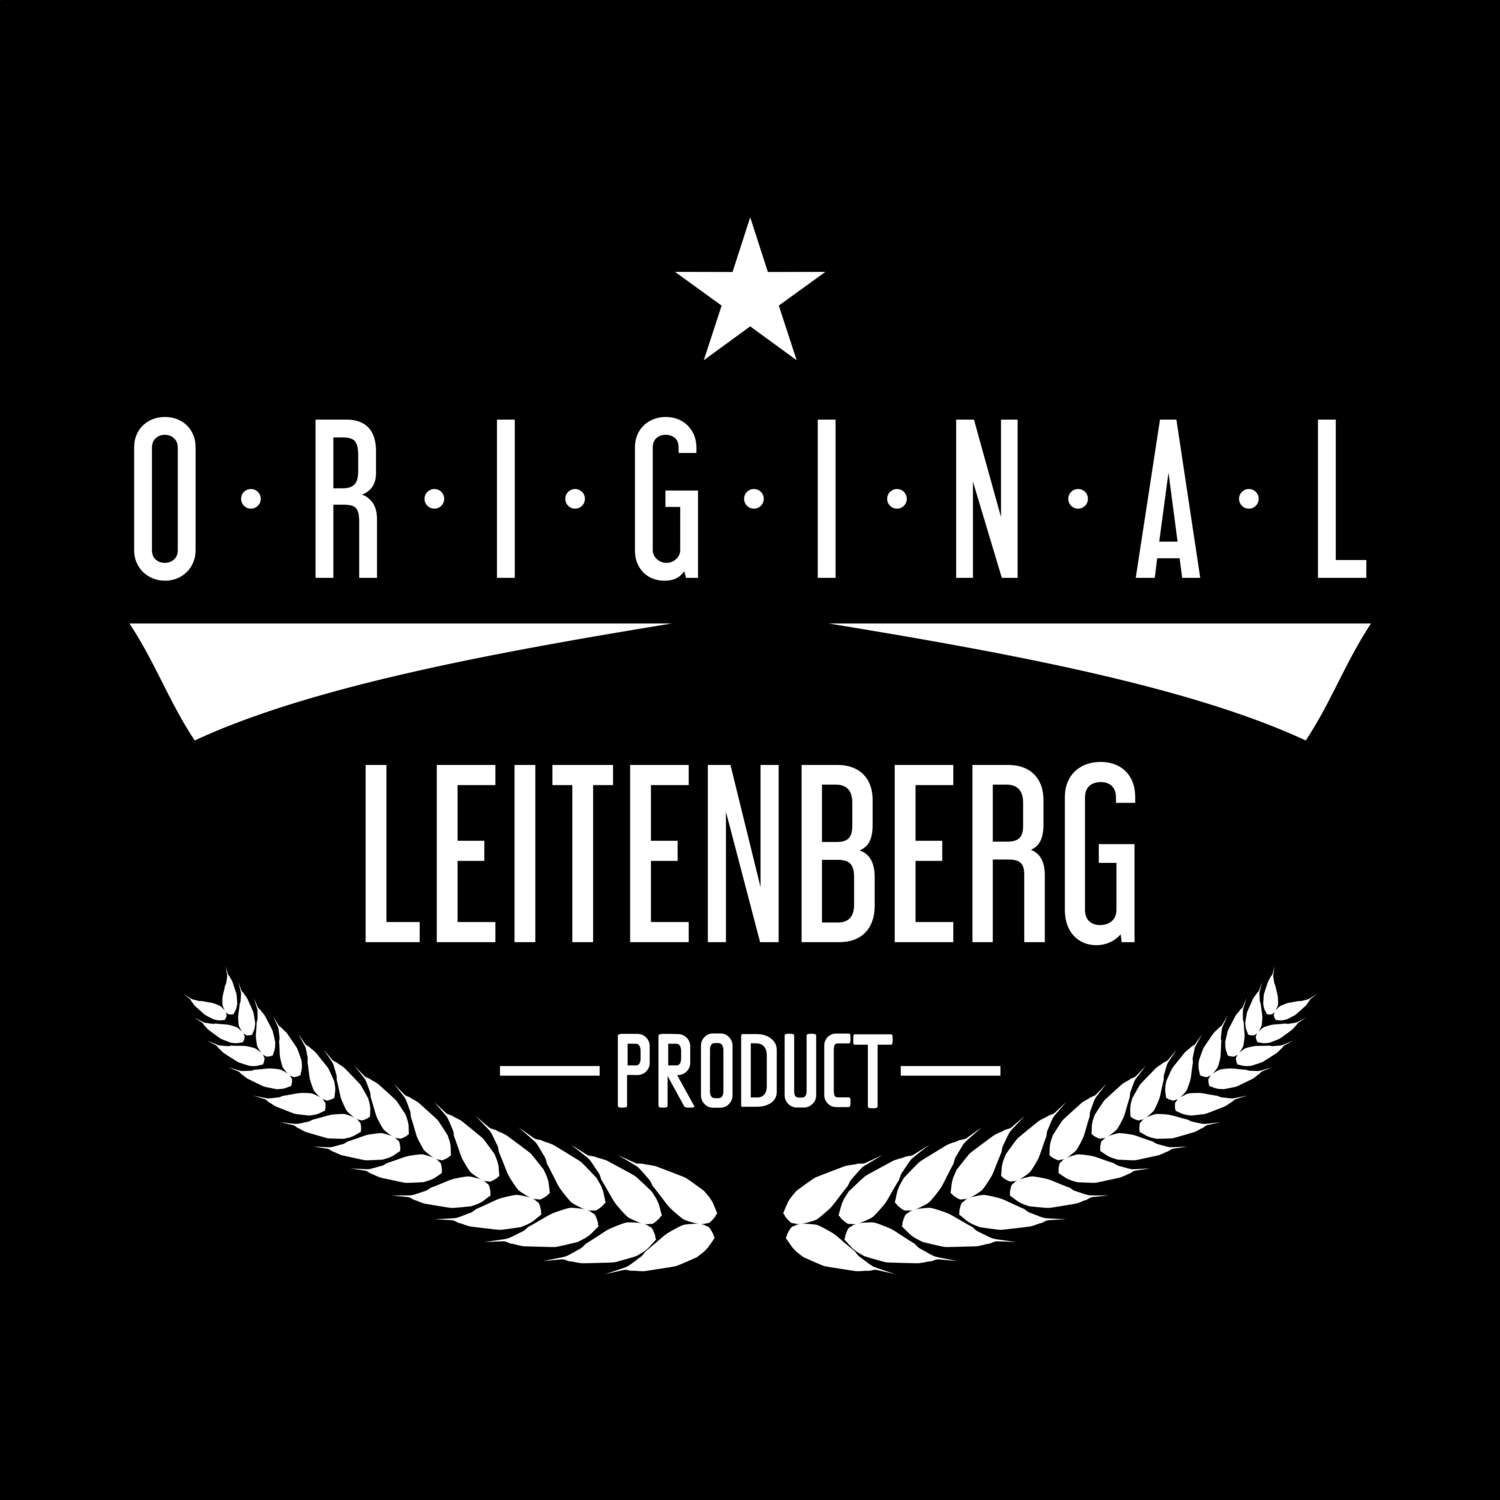 Leitenberg T-Shirt »Original Product«